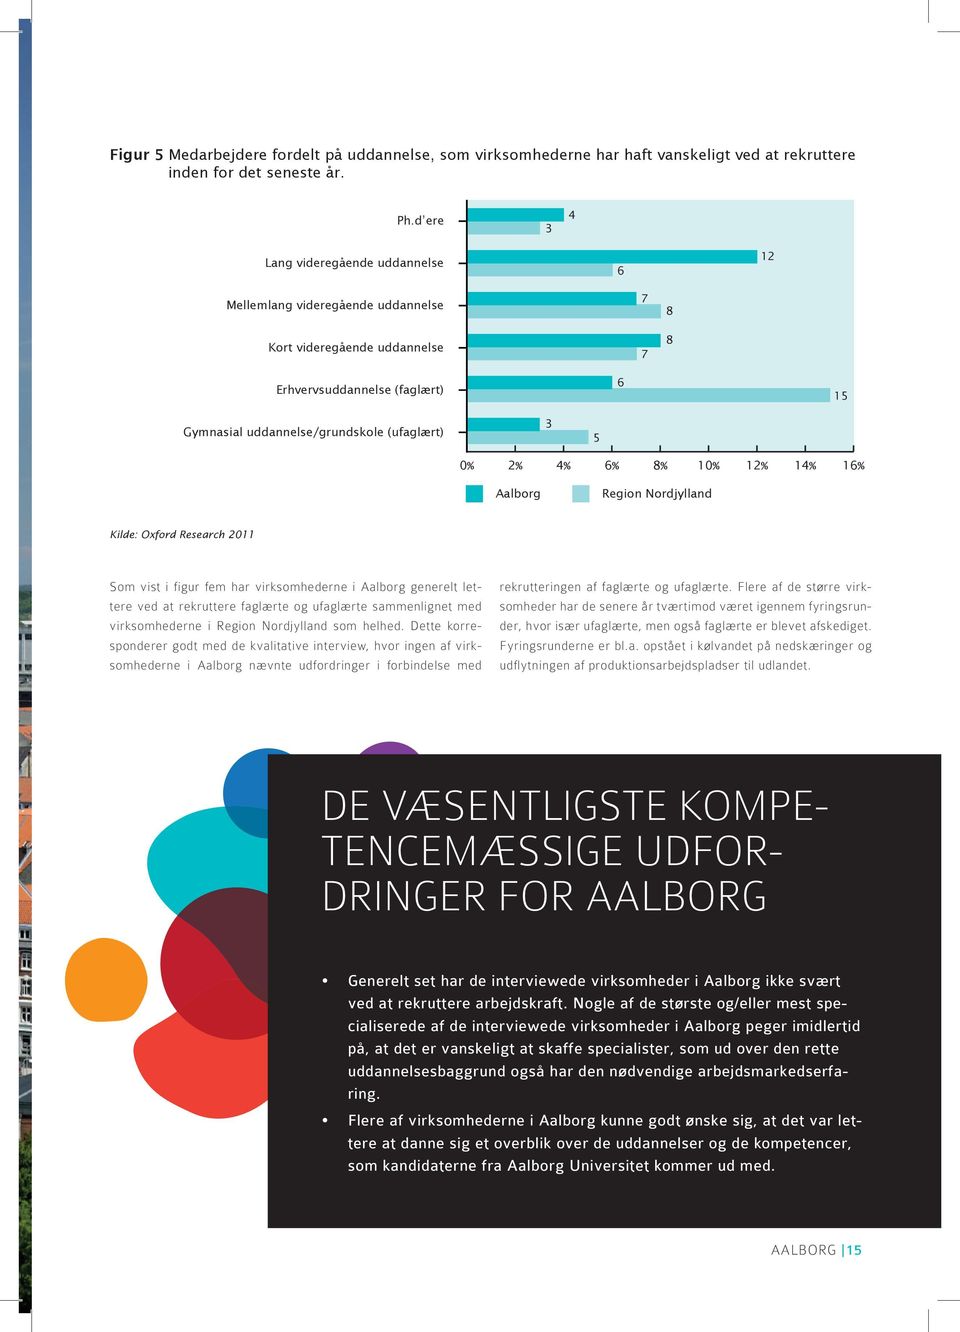 2% 4% 6% 8% 10% 12% 14% 16% Aalborg Region Nordjylland Kilde: Oxford Research 2011 Som vist i figur fem har virksomhederne i Aalborg generelt lettere ved at rekruttere faglærte og ufaglærte